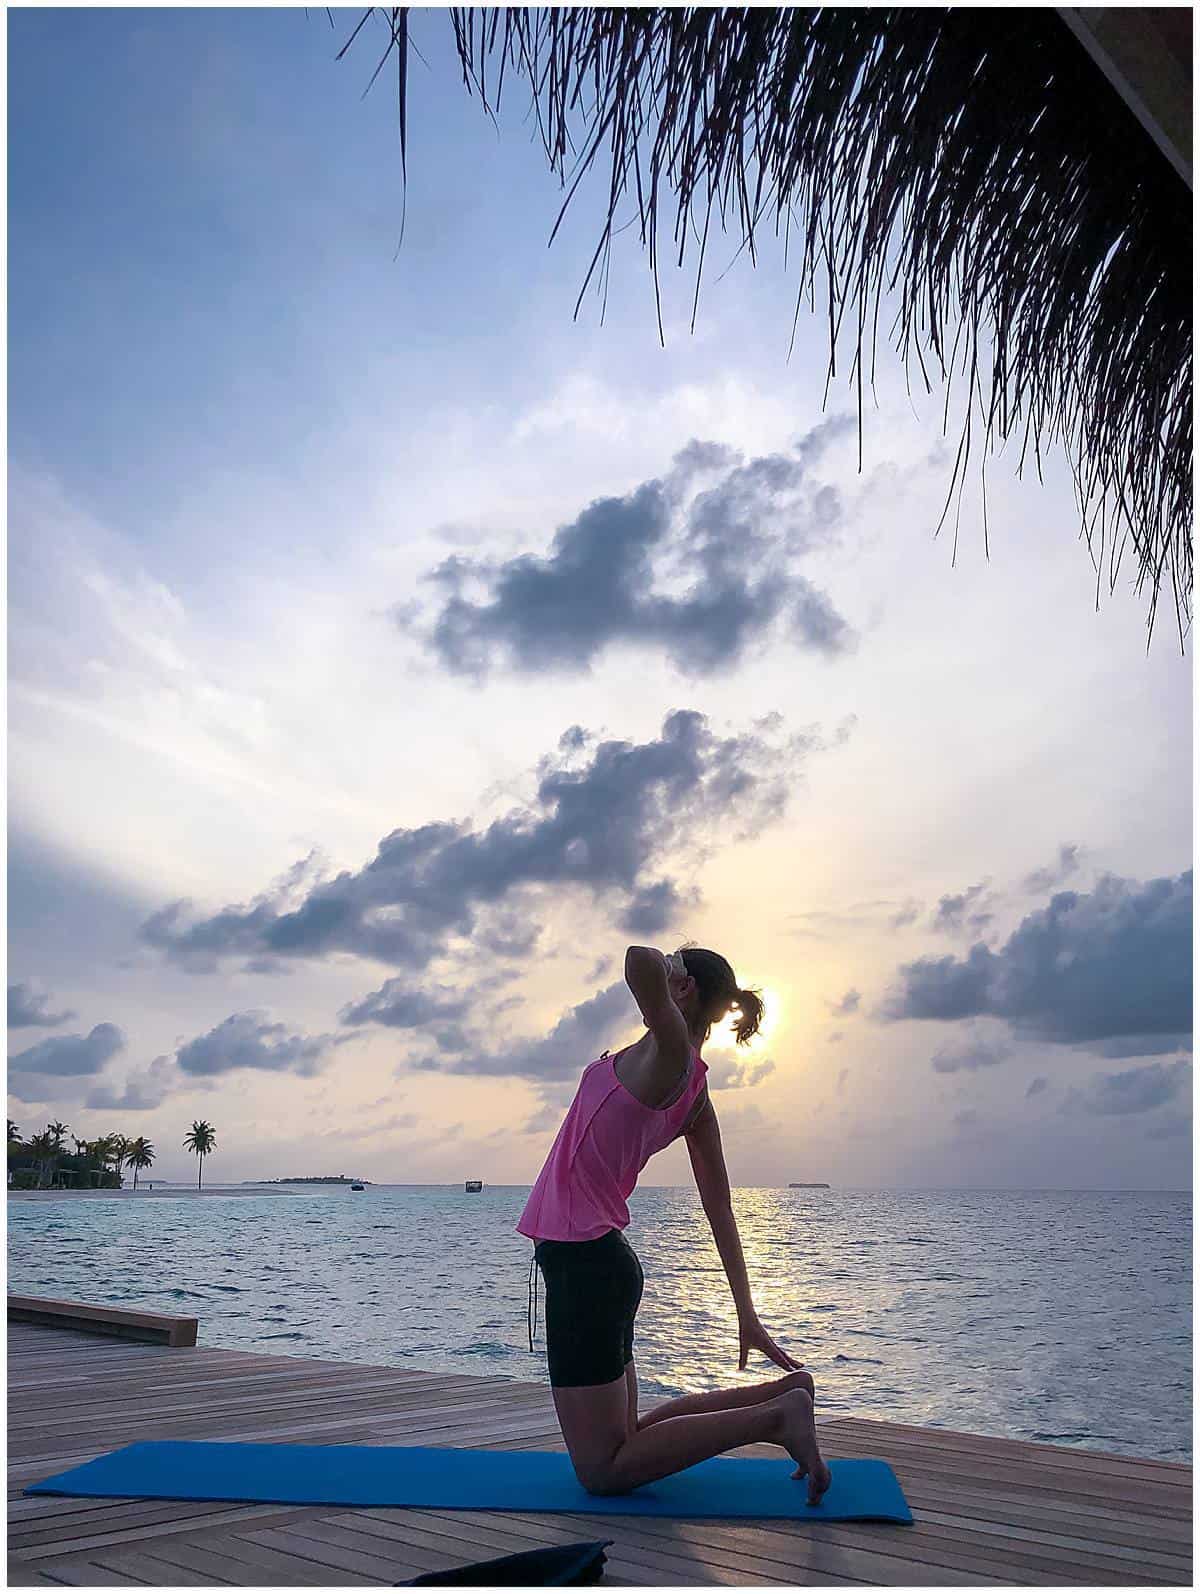 Yoga at dawn in the Maldives